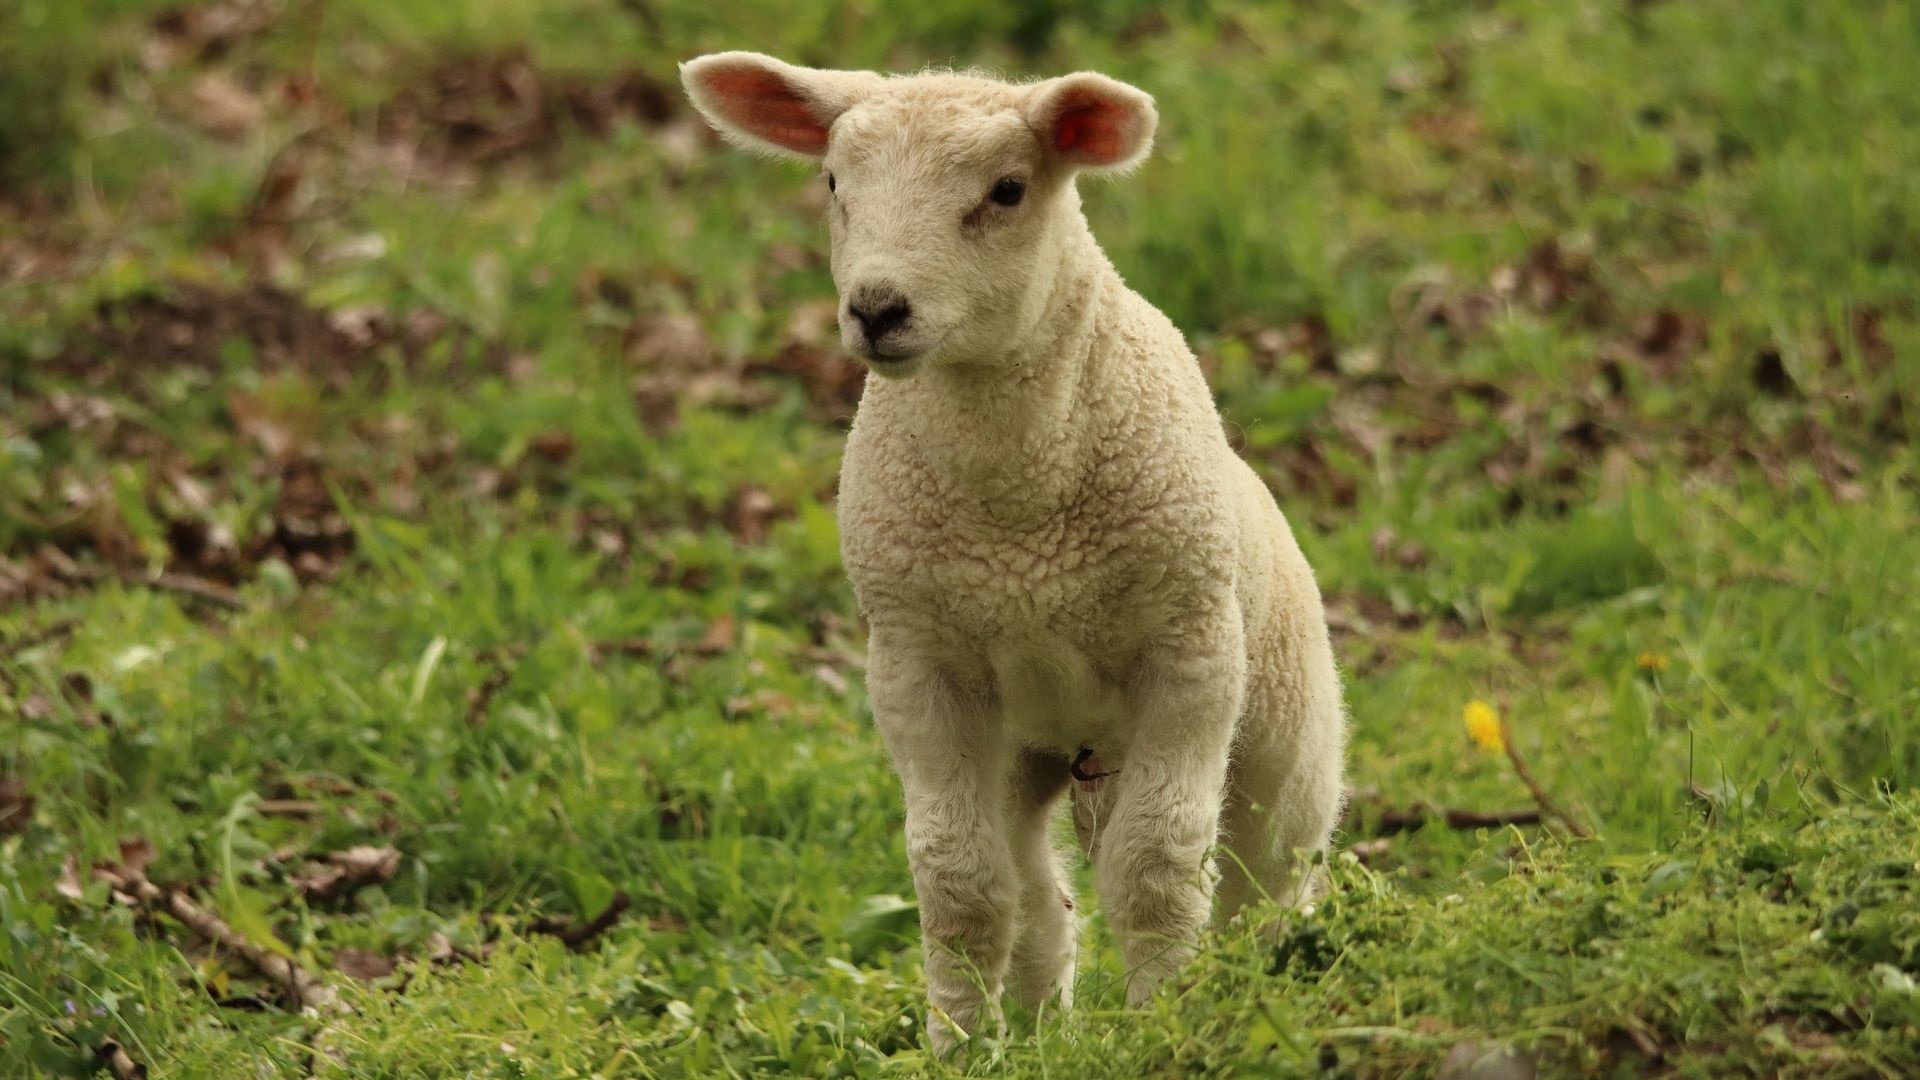 Cute baby sheep, HD desktop wallpaper, Adorable animals, High-resolution image, 1920x1080 Full HD Desktop